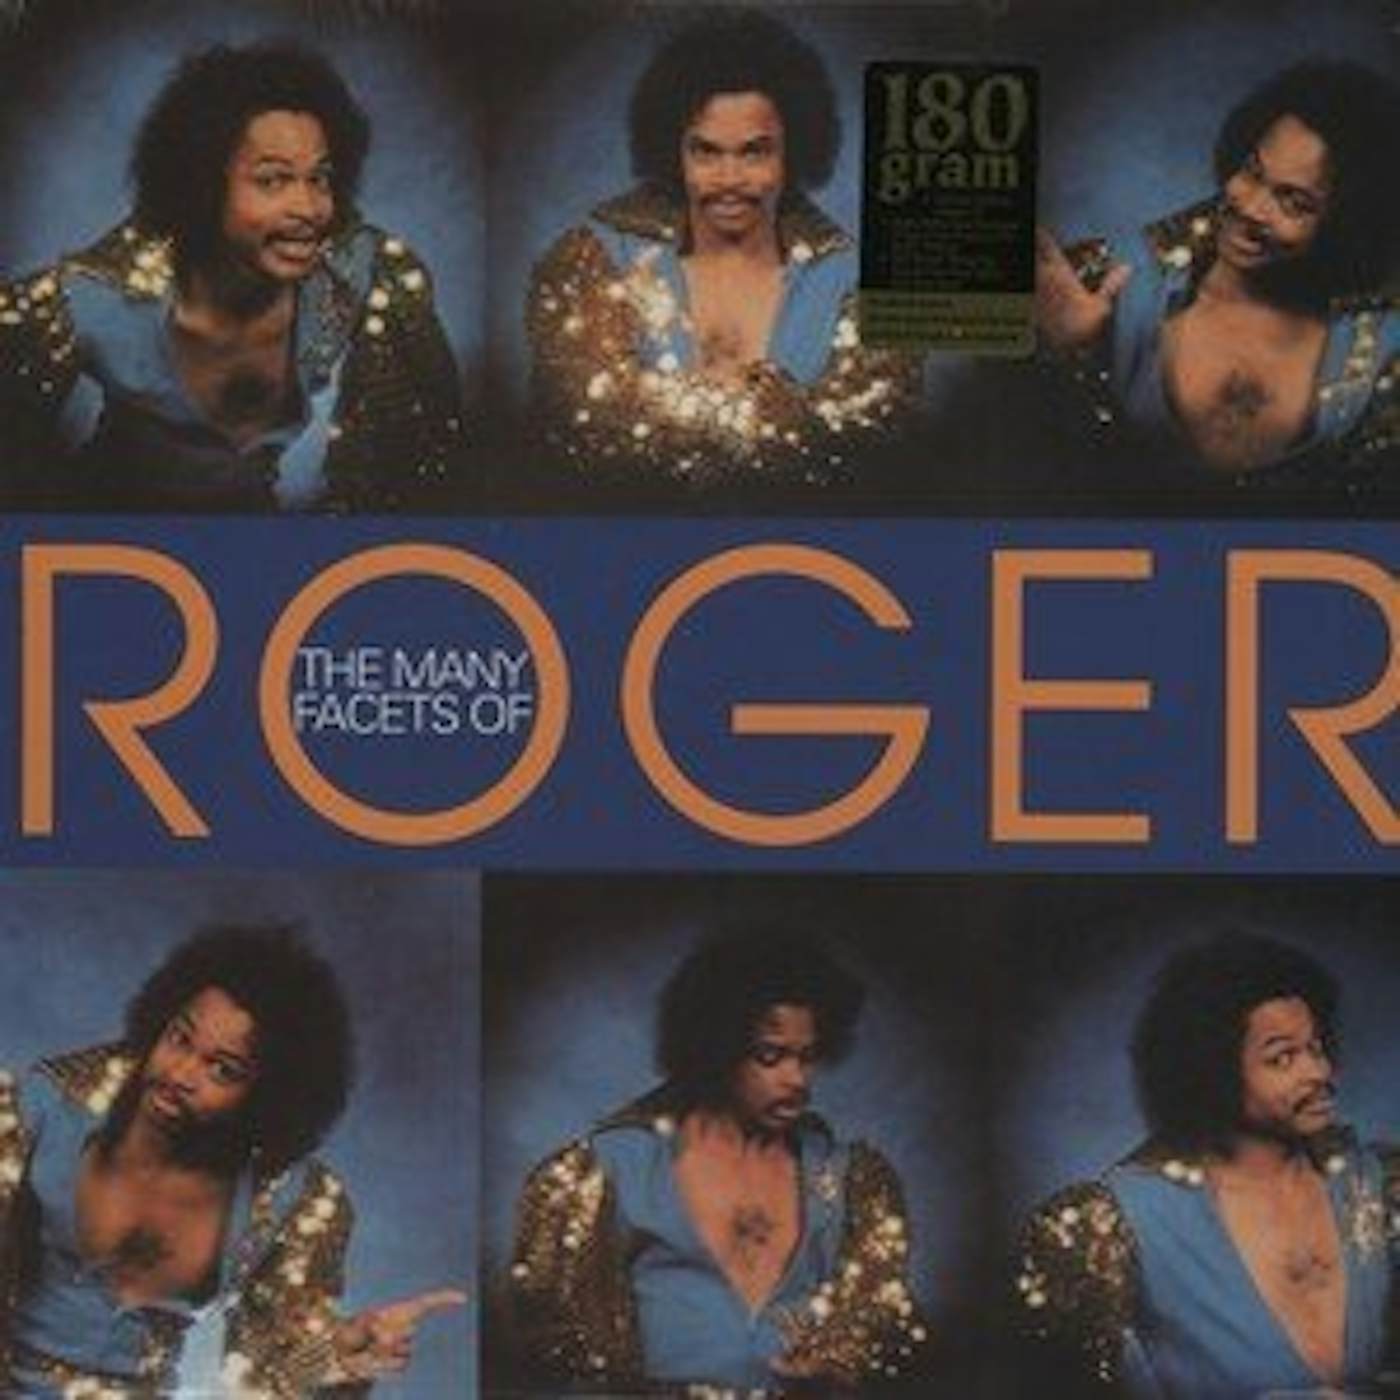 MANY FACETS OF ROGER Vinyl Record